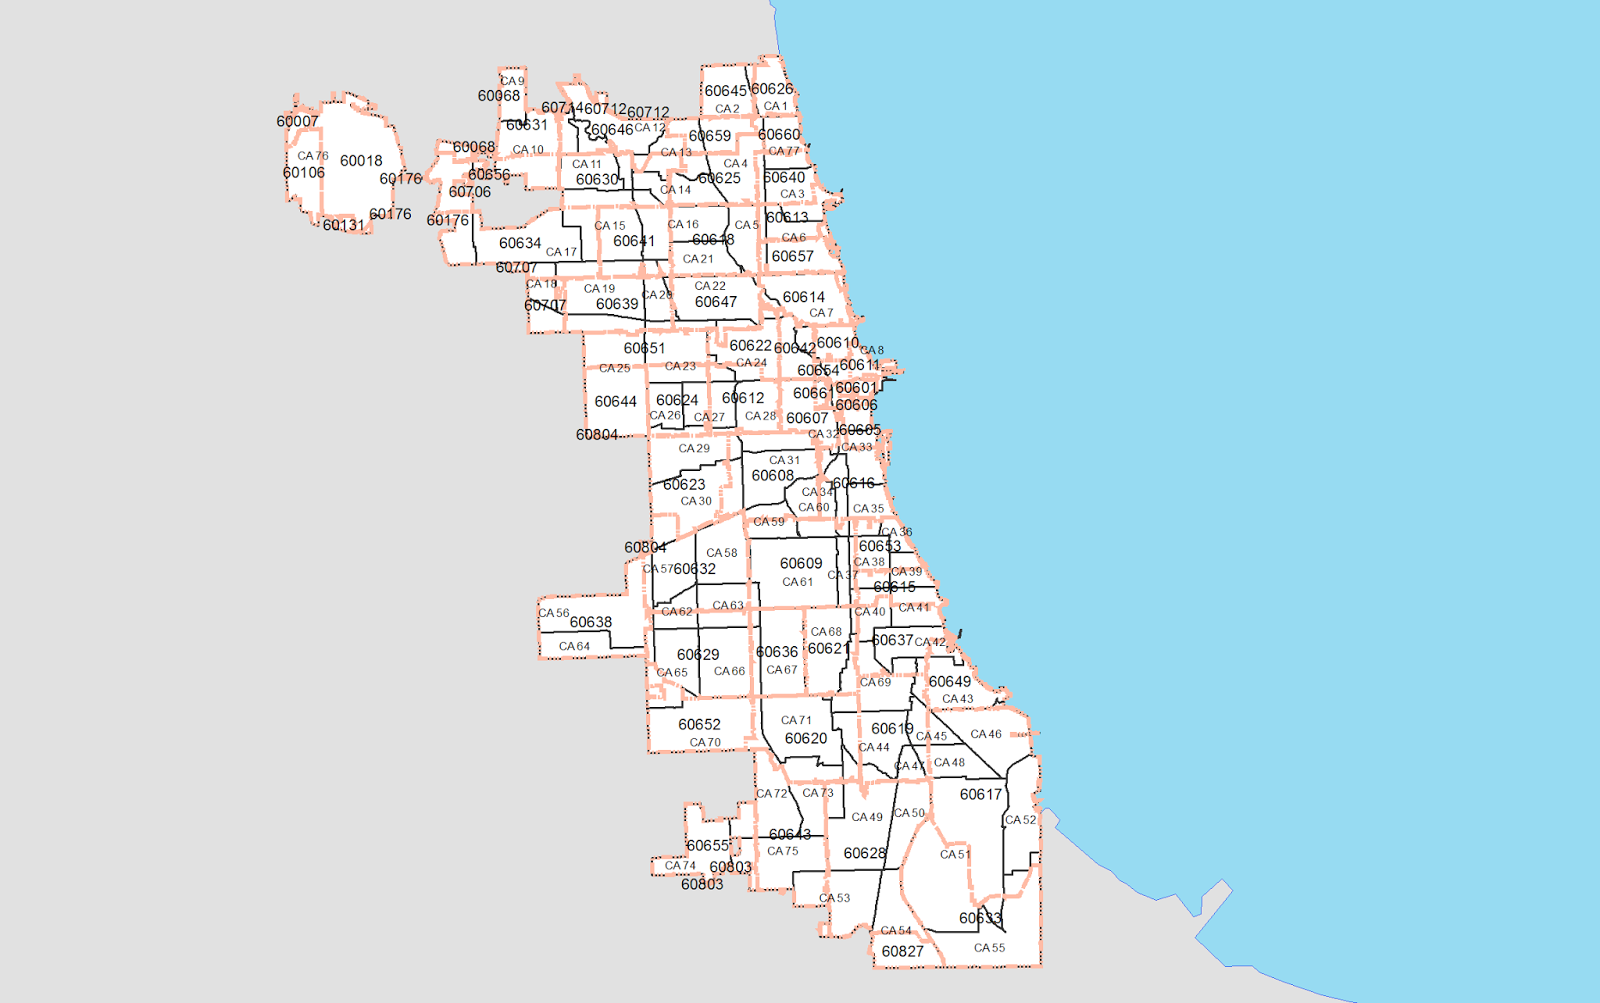 zip code map of chicago Chicago Data Guy Chicago Community Area And Zip Code Equivalency zip code map of chicago